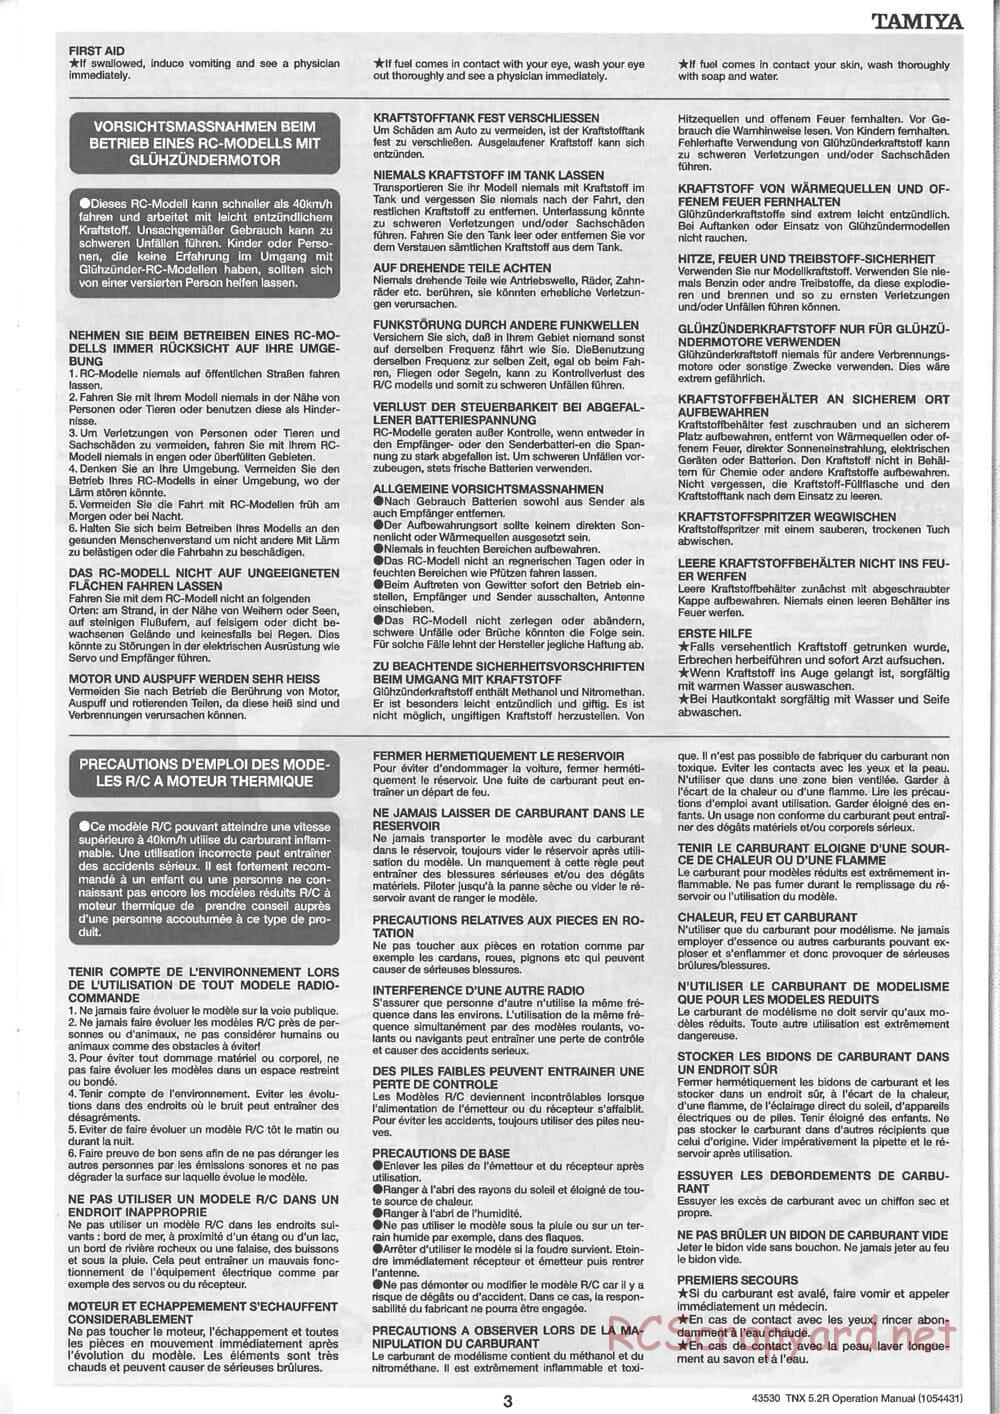 Tamiya - TNX 5.2R - TGM-04 - Operating Manual - Page 3